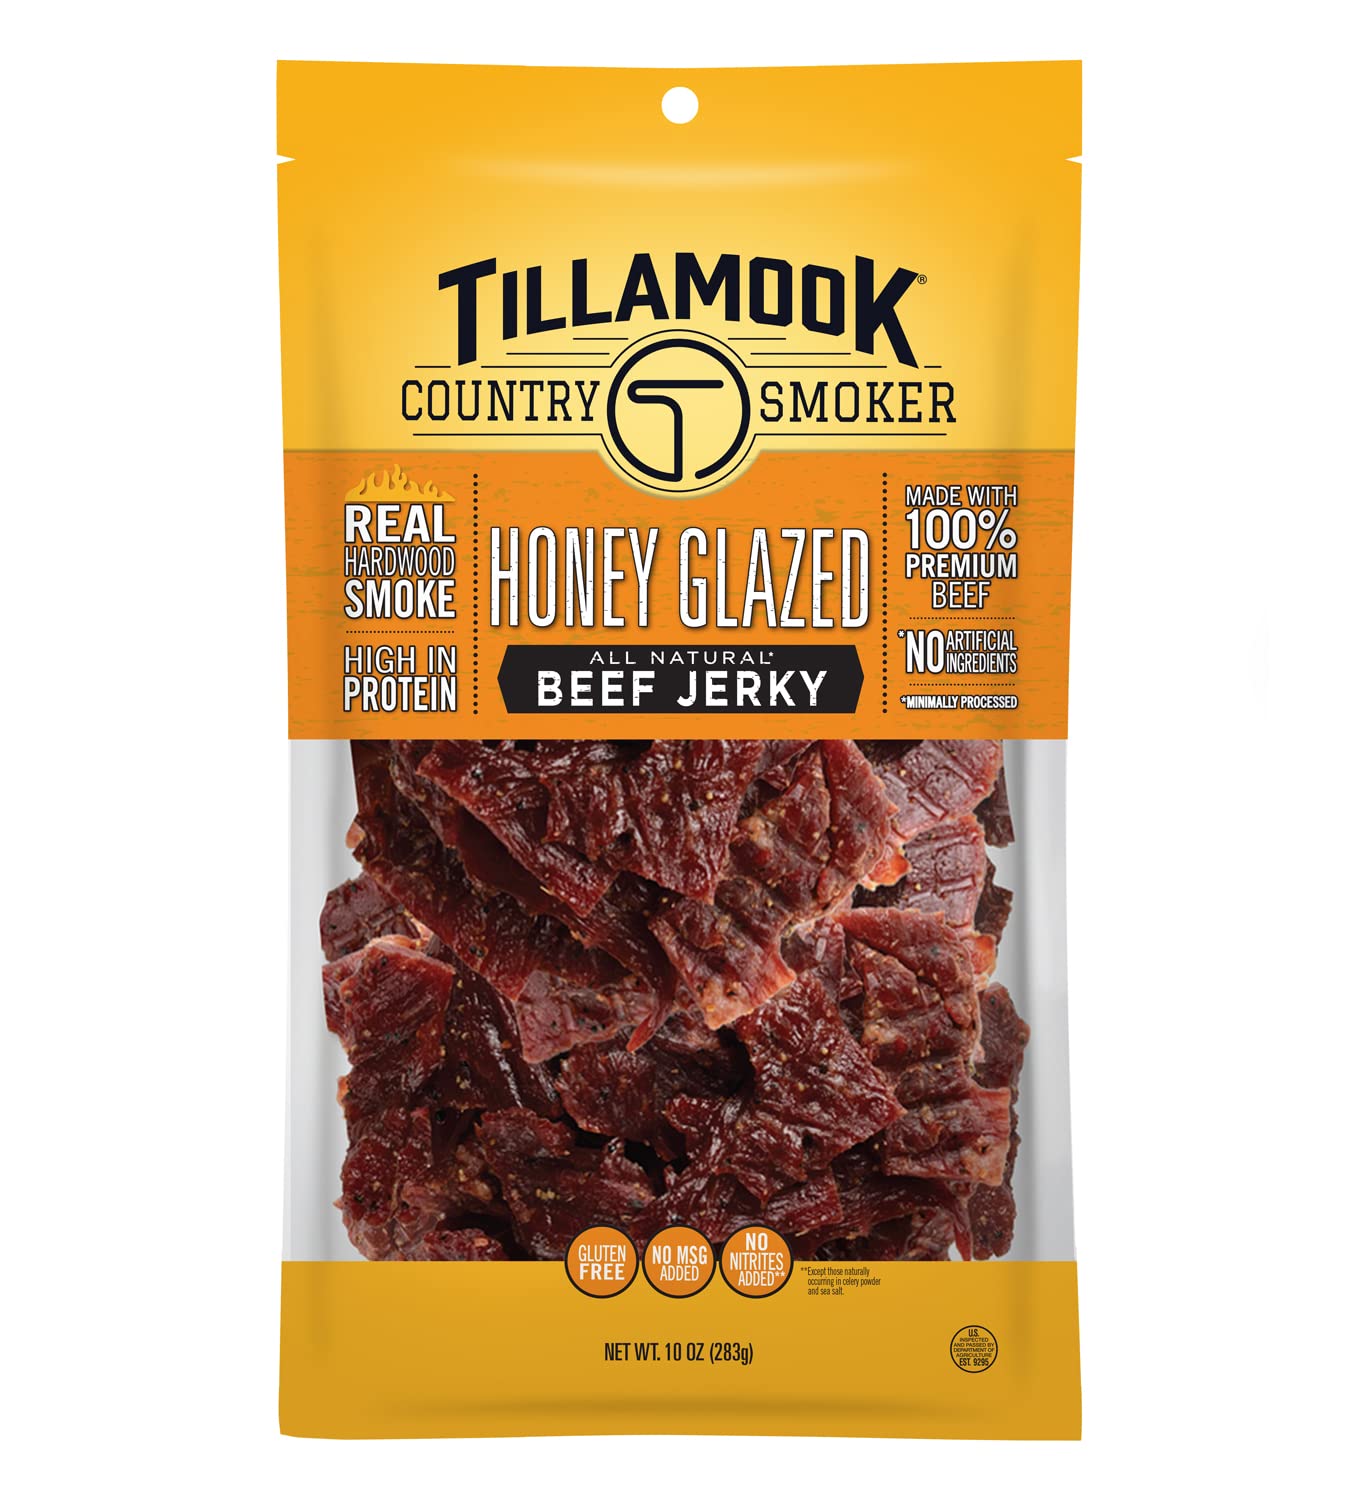 10-Oz Tillamook Country Smoker Real Hardwood Smoked Beef Jerky (Honey Glazed) $8.98 + Free Shipping w/ Prime or on $35+